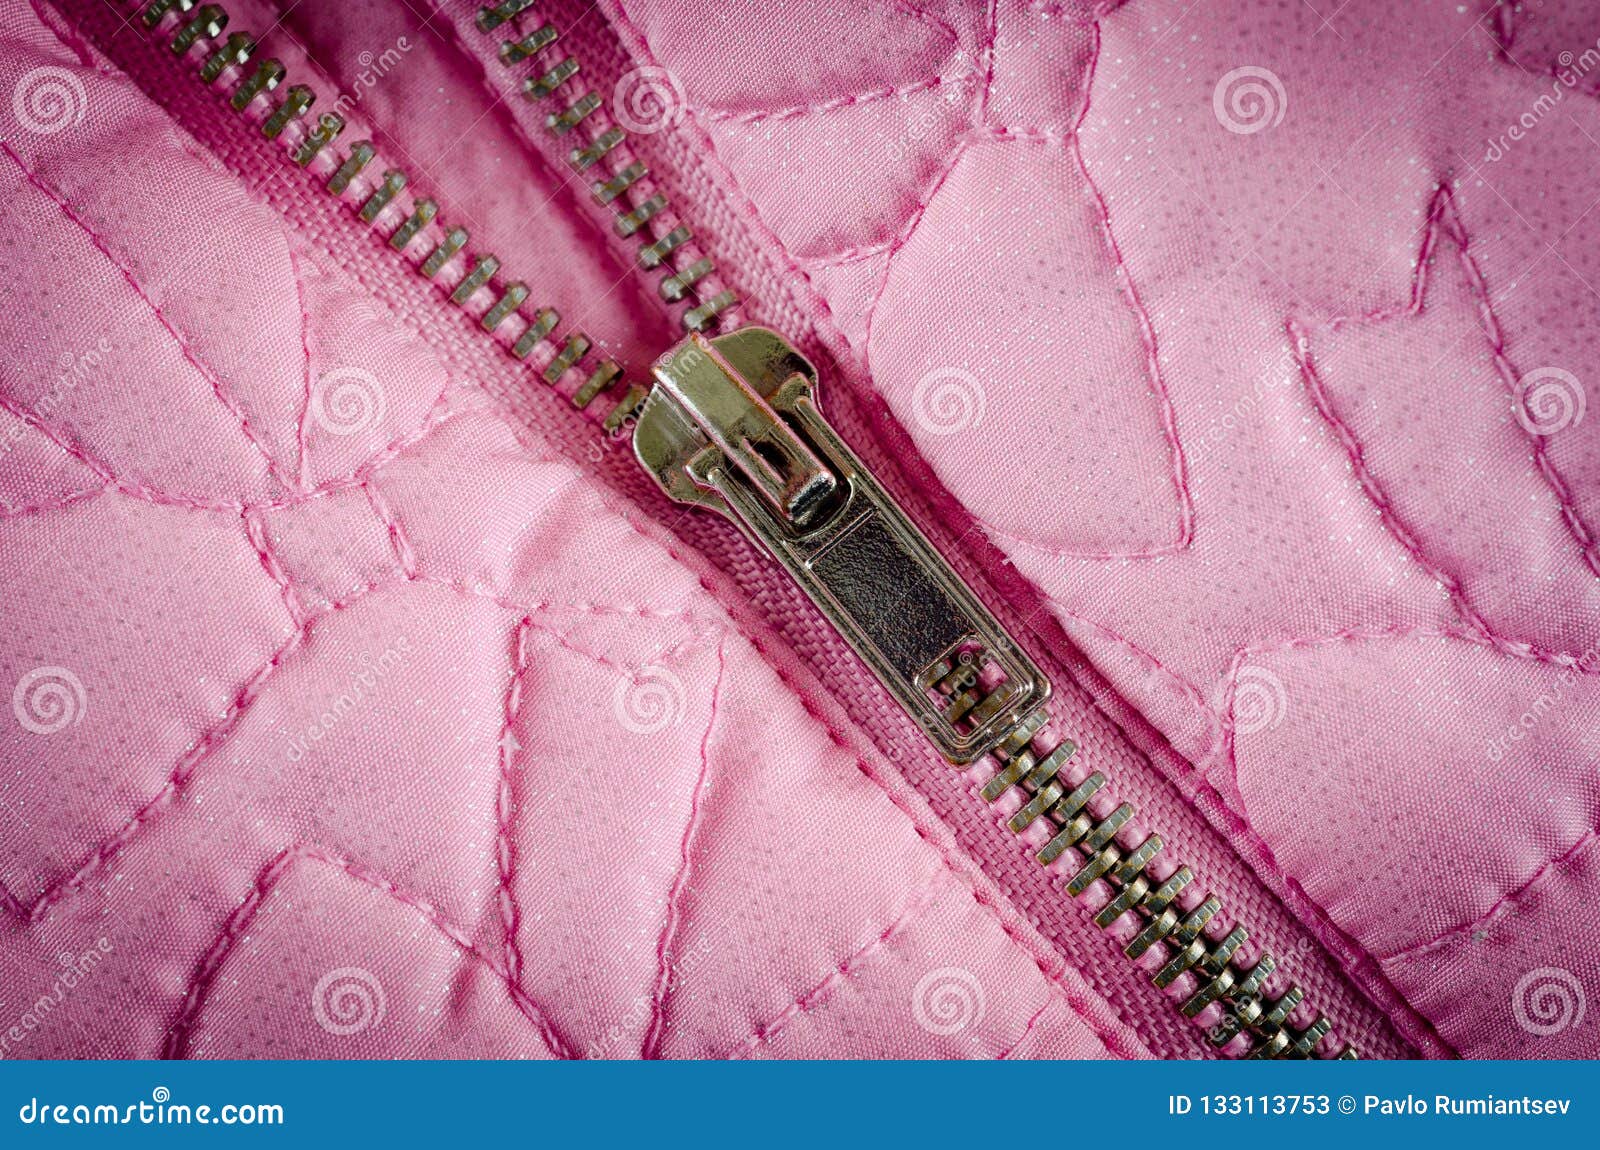 Zipper on Pink Balon Jacket Close-up Shot Stock Image - Image of fiber ...